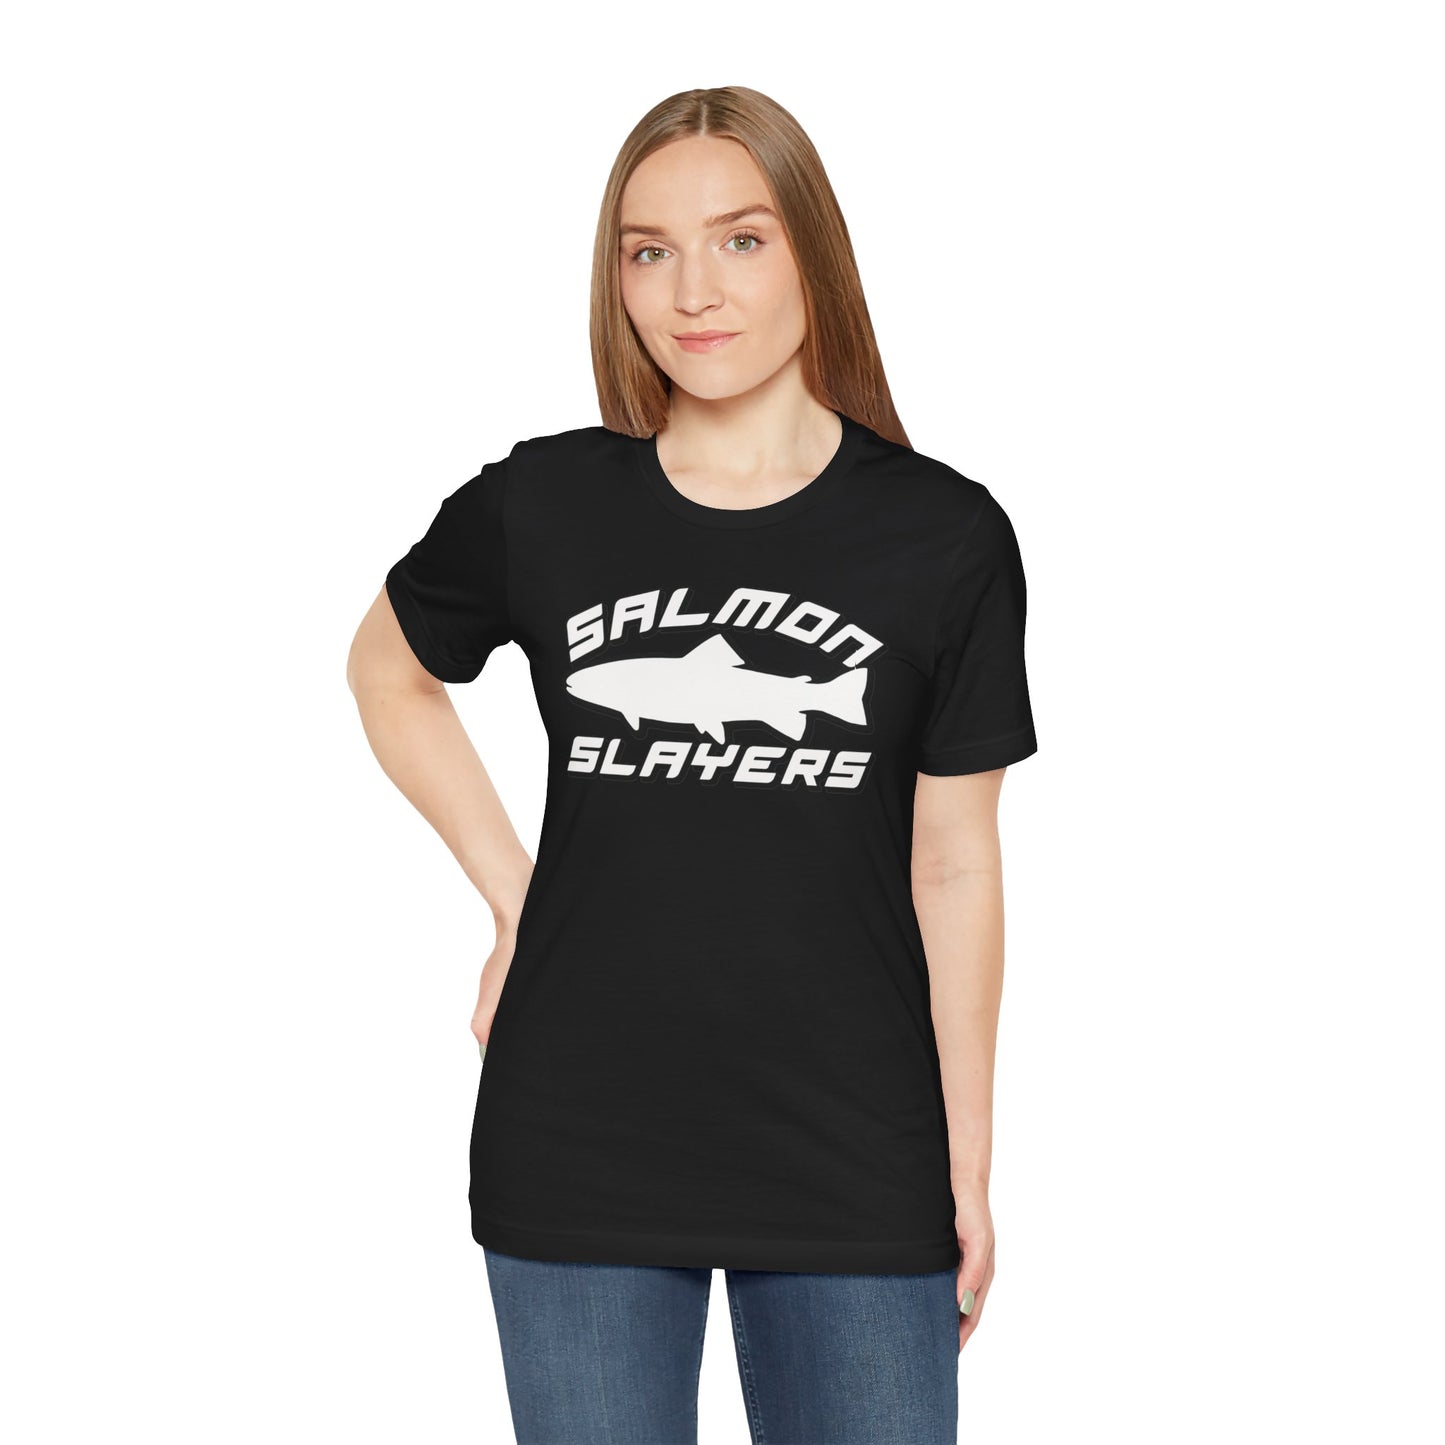 Slamon Slayers - Sport - T-Shirt